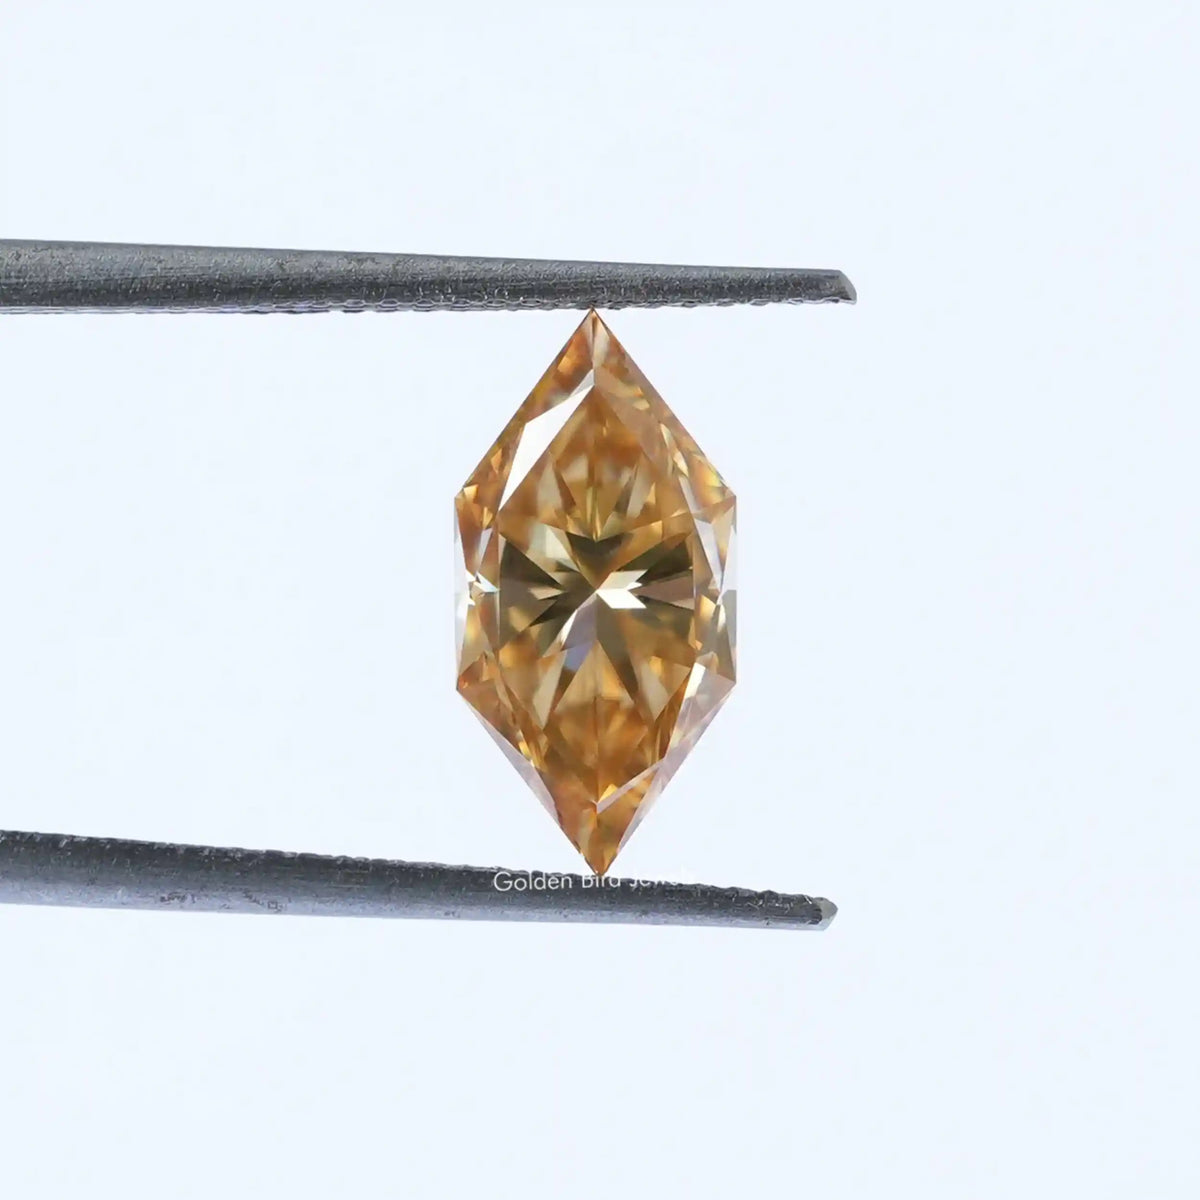 [In tweezer front view of marquise cut loose stone]-[Golden Bird Jewels]